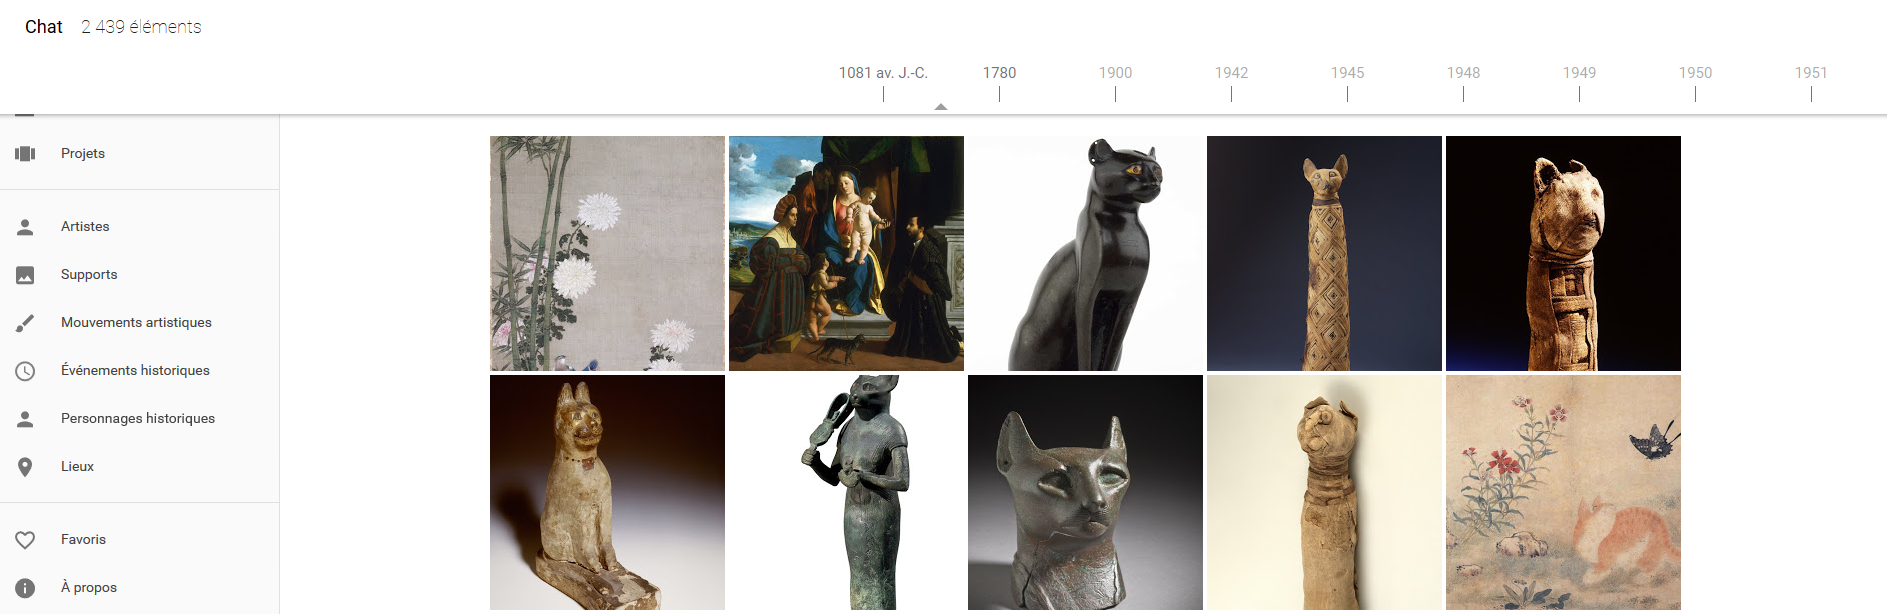 FireShot Screen Capture #350 - 'Chat - Google Arts & Culture' - www_google_com_culturalinstitute_beta_time_em=m01yrx&categoryId=other&date=-1081